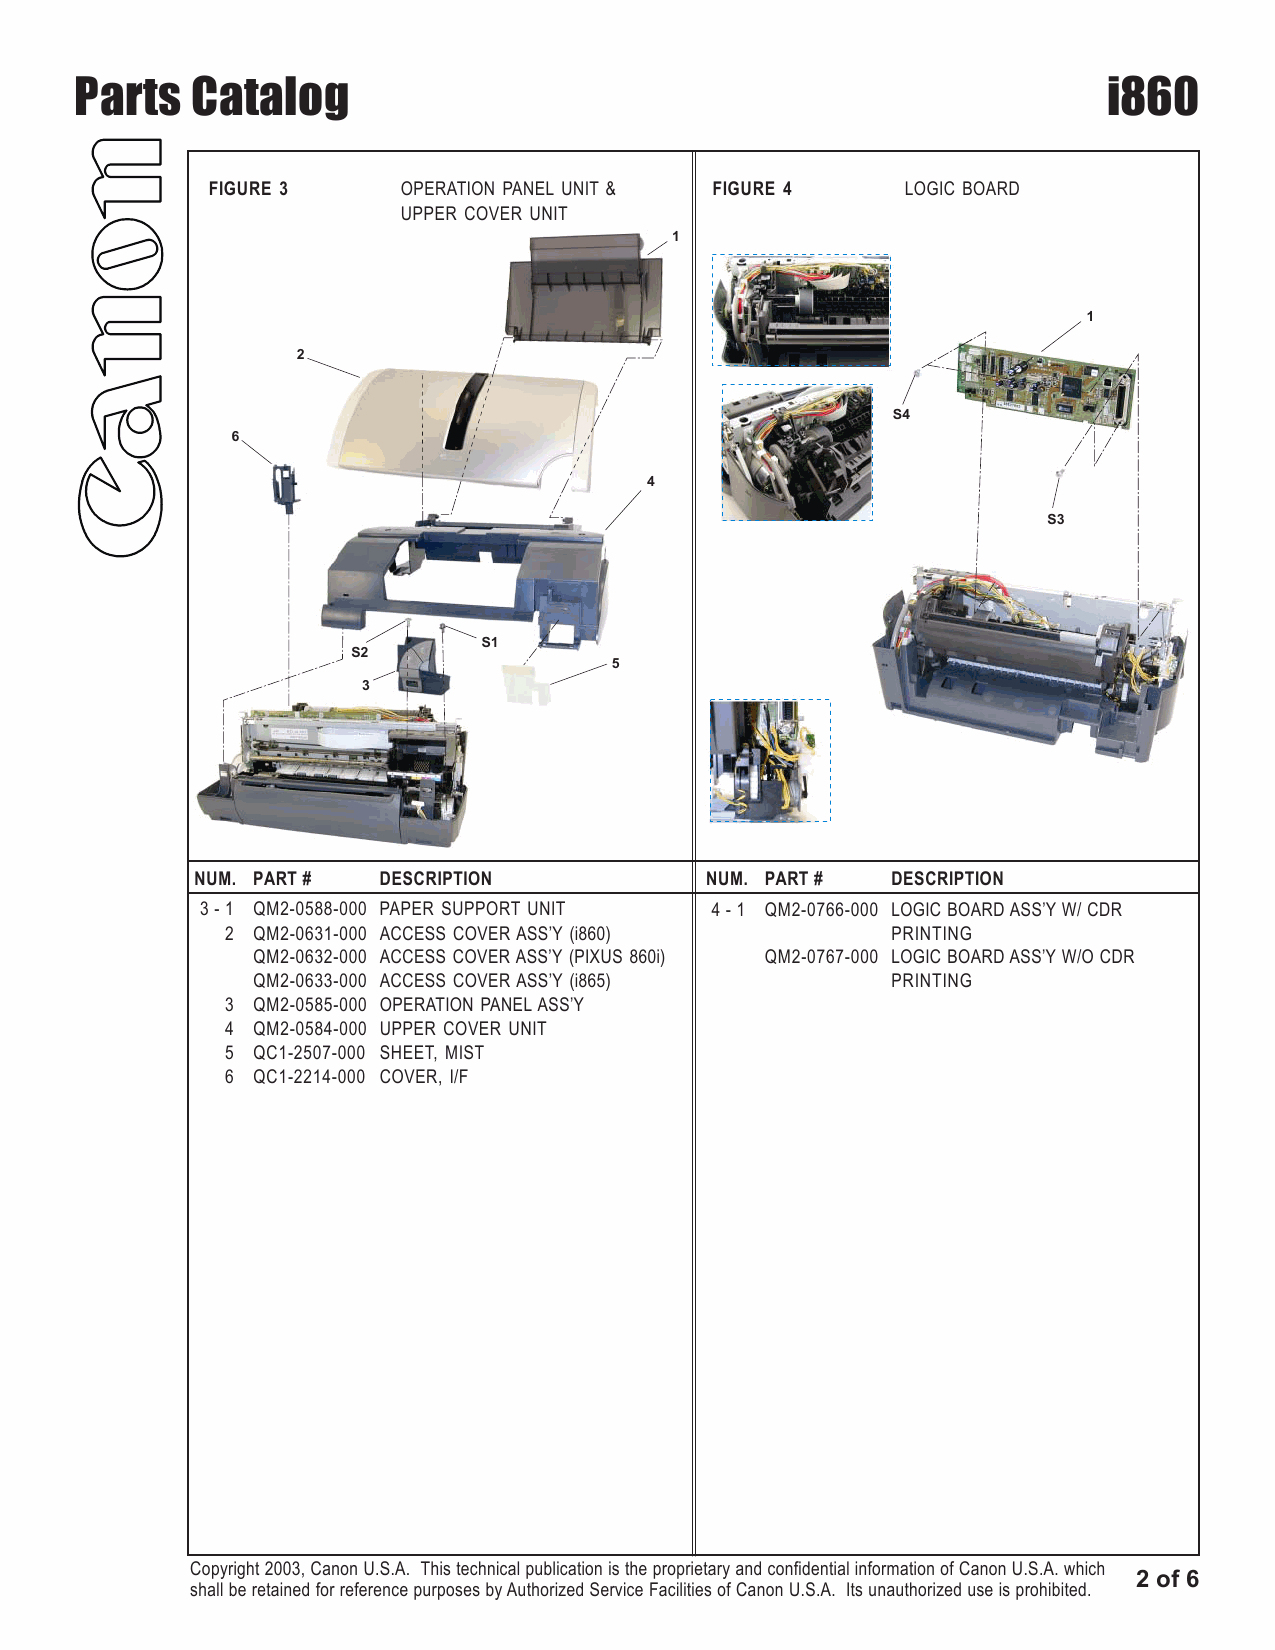 Canon PIXUS i860 Parts Catalog Manual-3